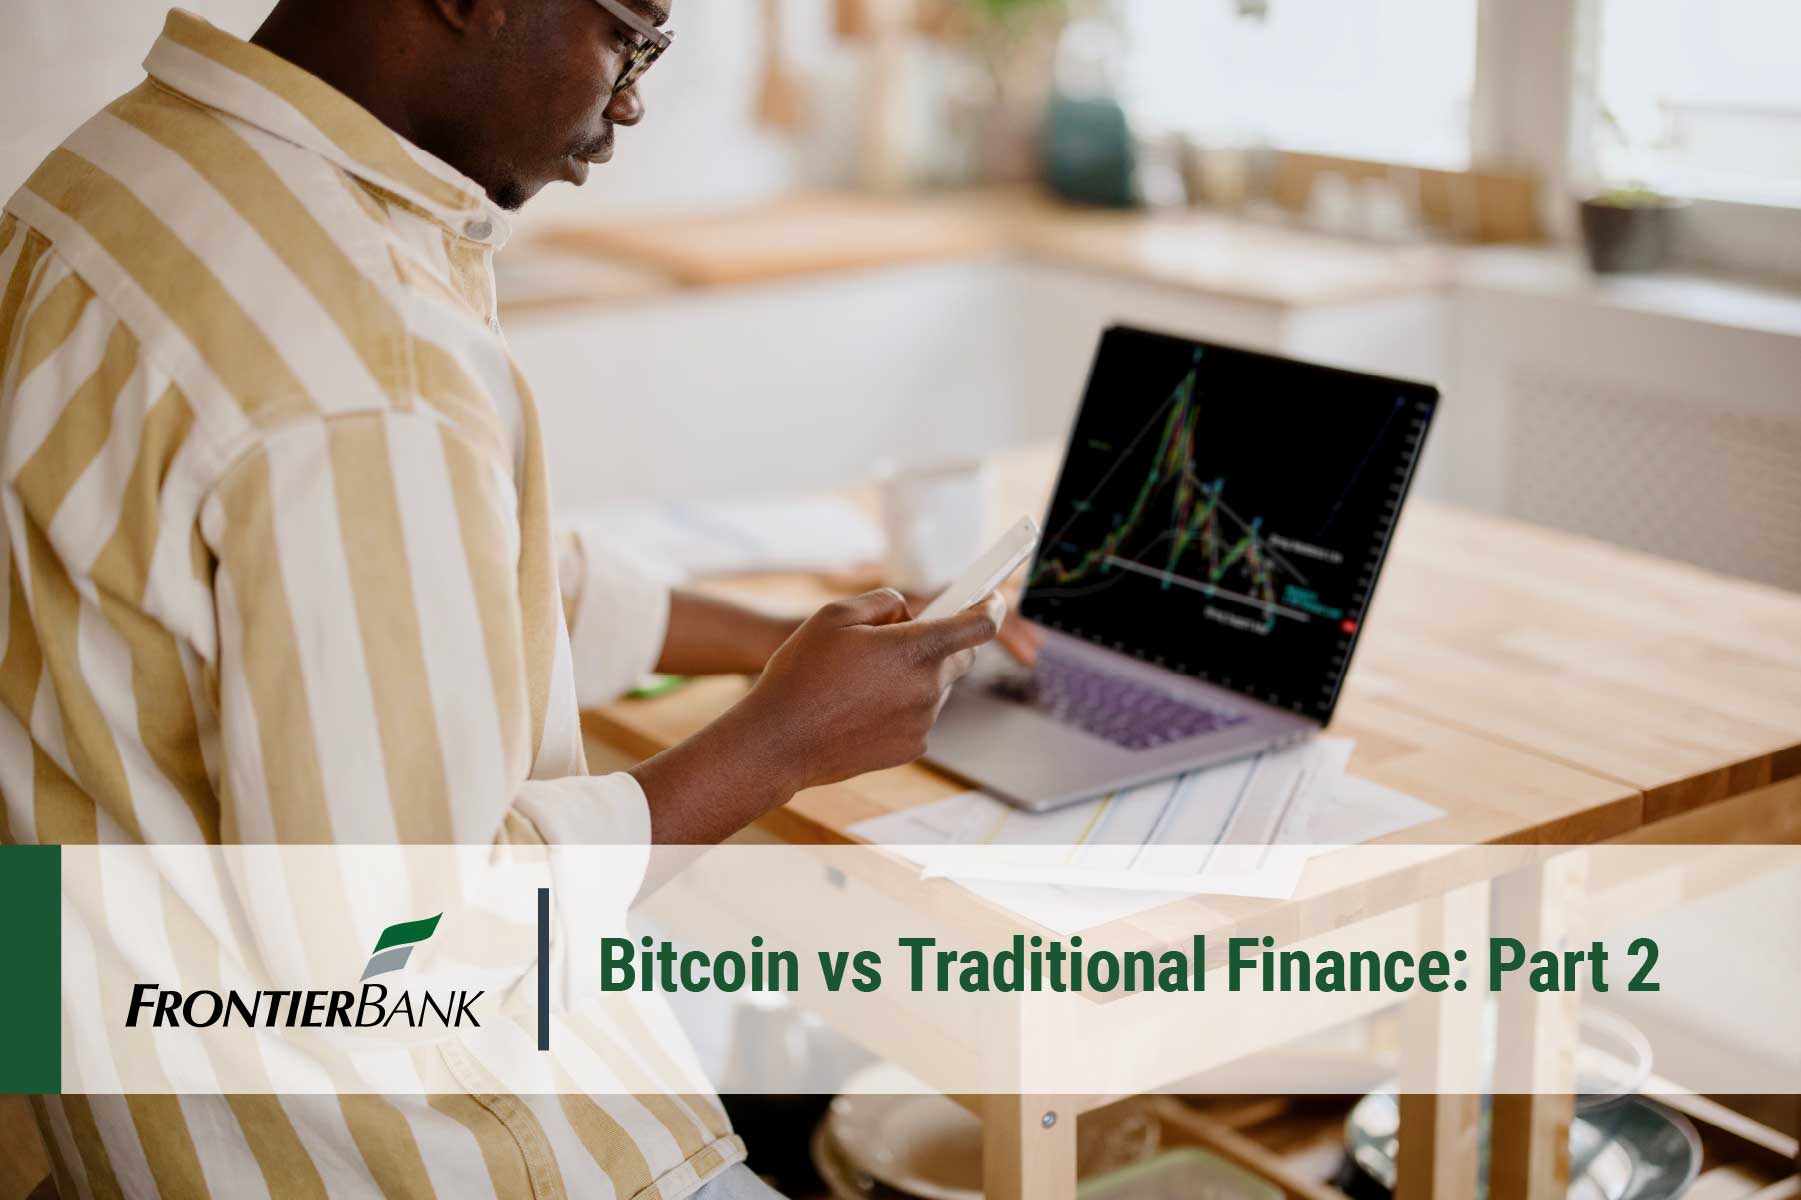 Bitcoin vs Traditional Finance part 2